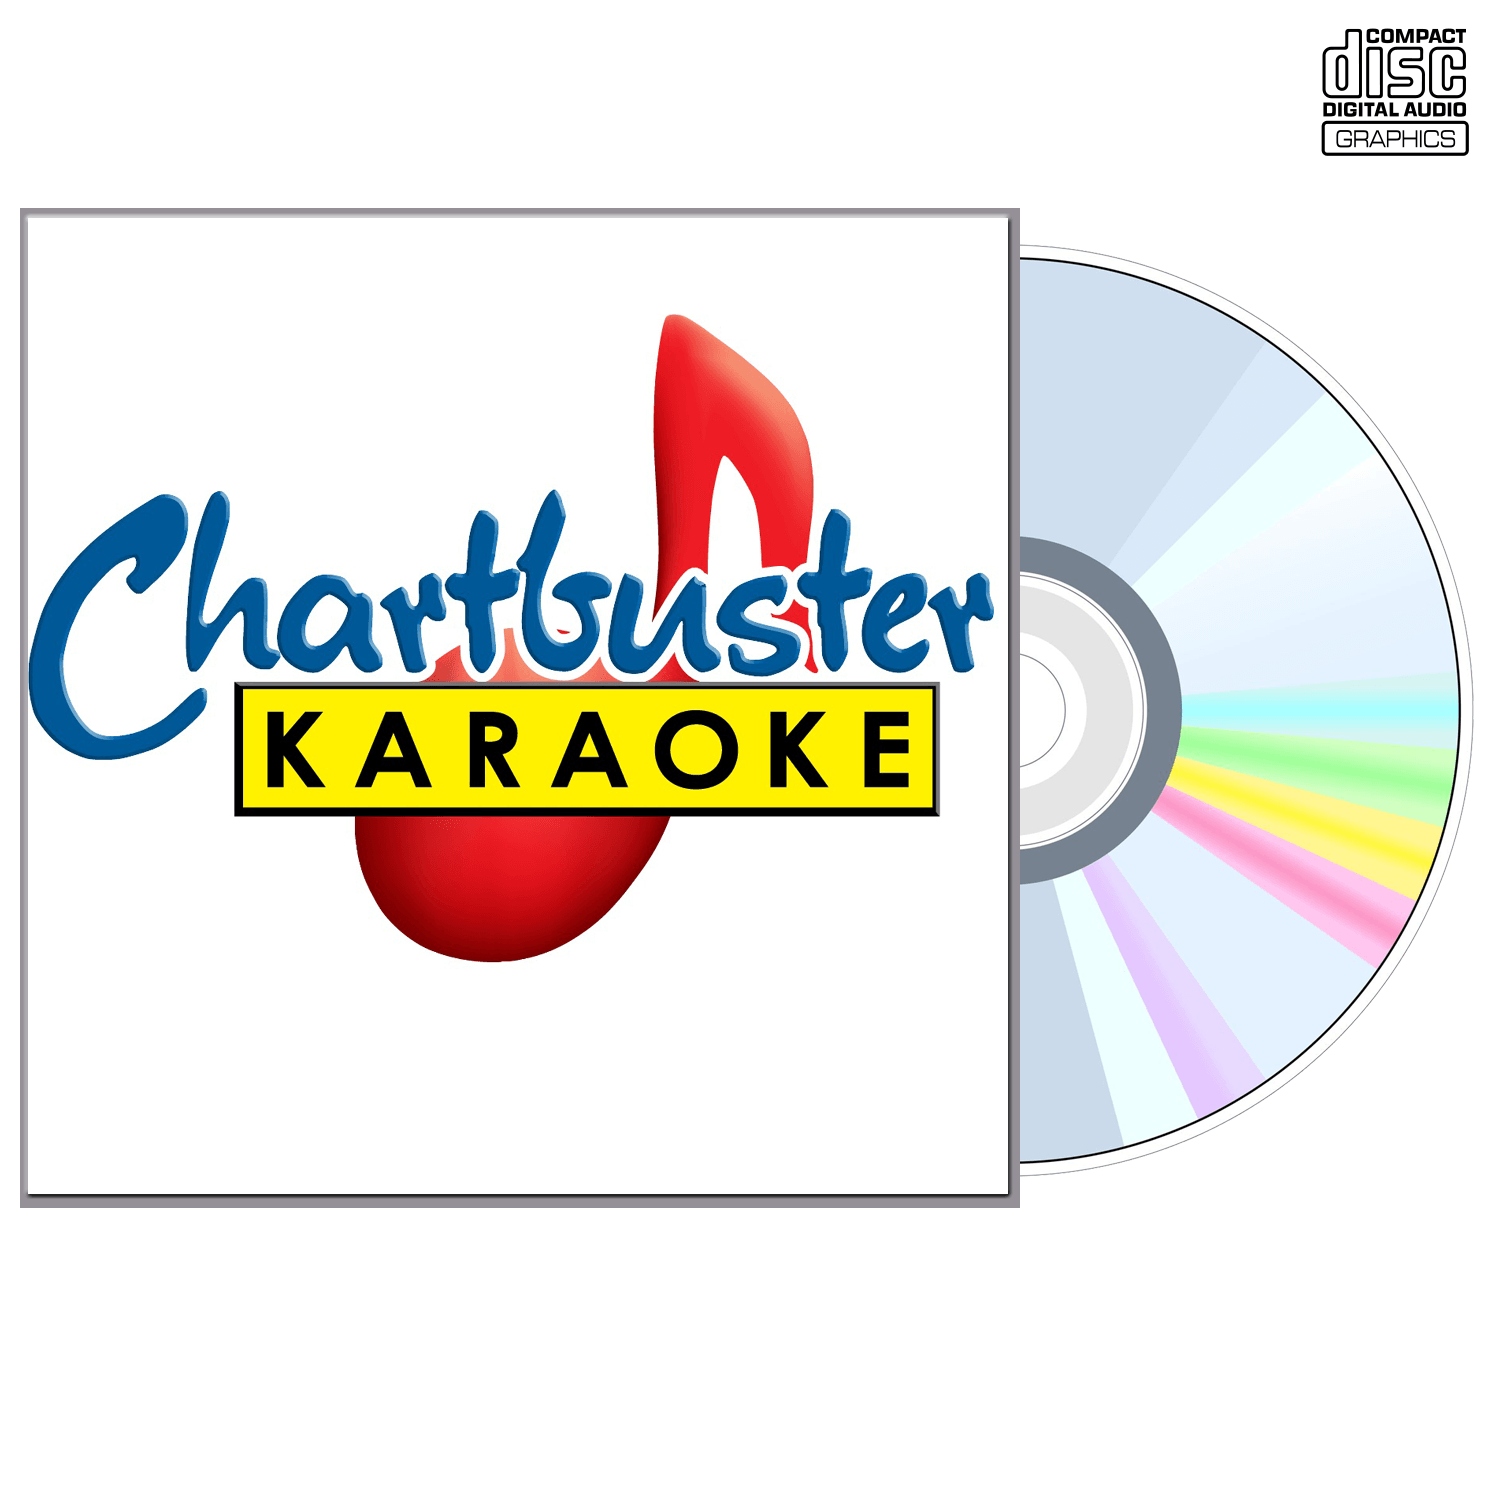 Ultimate 90's Collection V05 - CD+G - Chartbuster Karaoke - Karaoke Home Entertainment